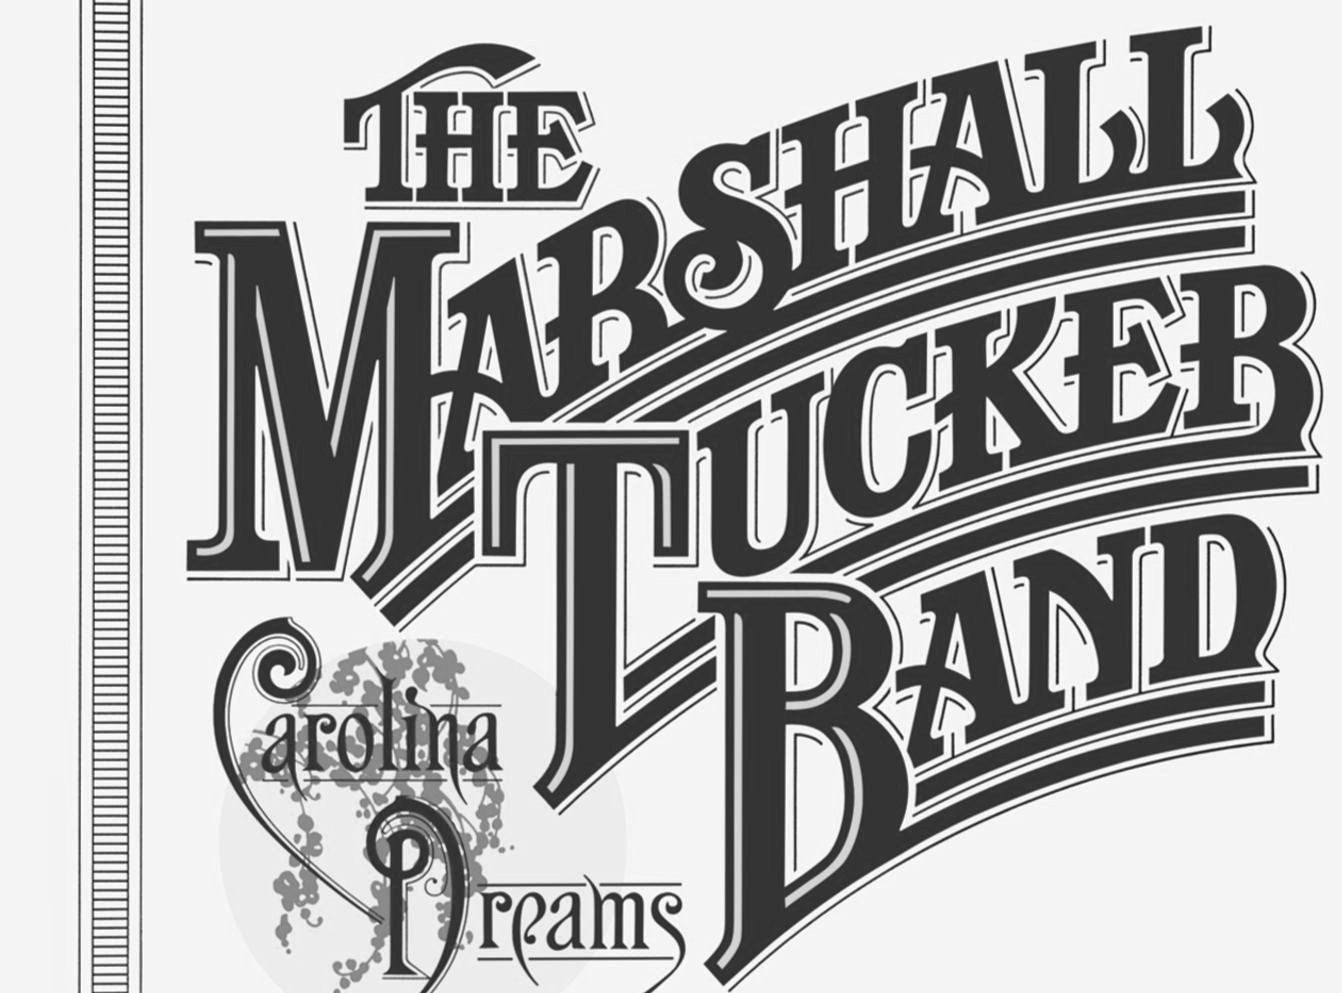 The Marshall Tucker Band